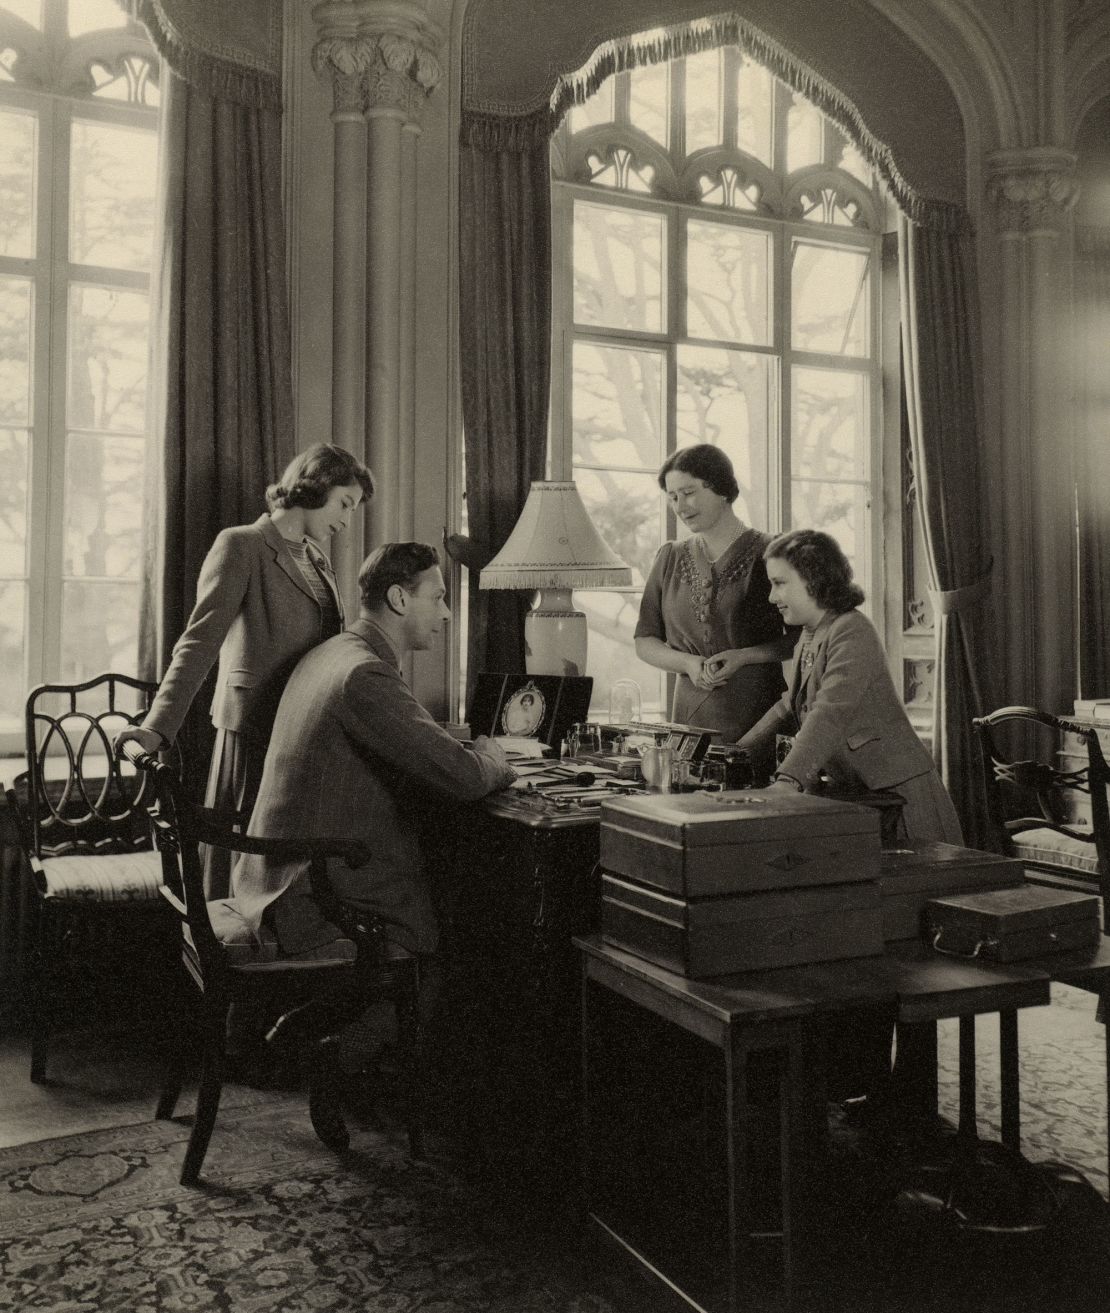 The Royal Family at Royal Lodge, 1943, conveying a reassuring sense of domesticity and calm during the war.